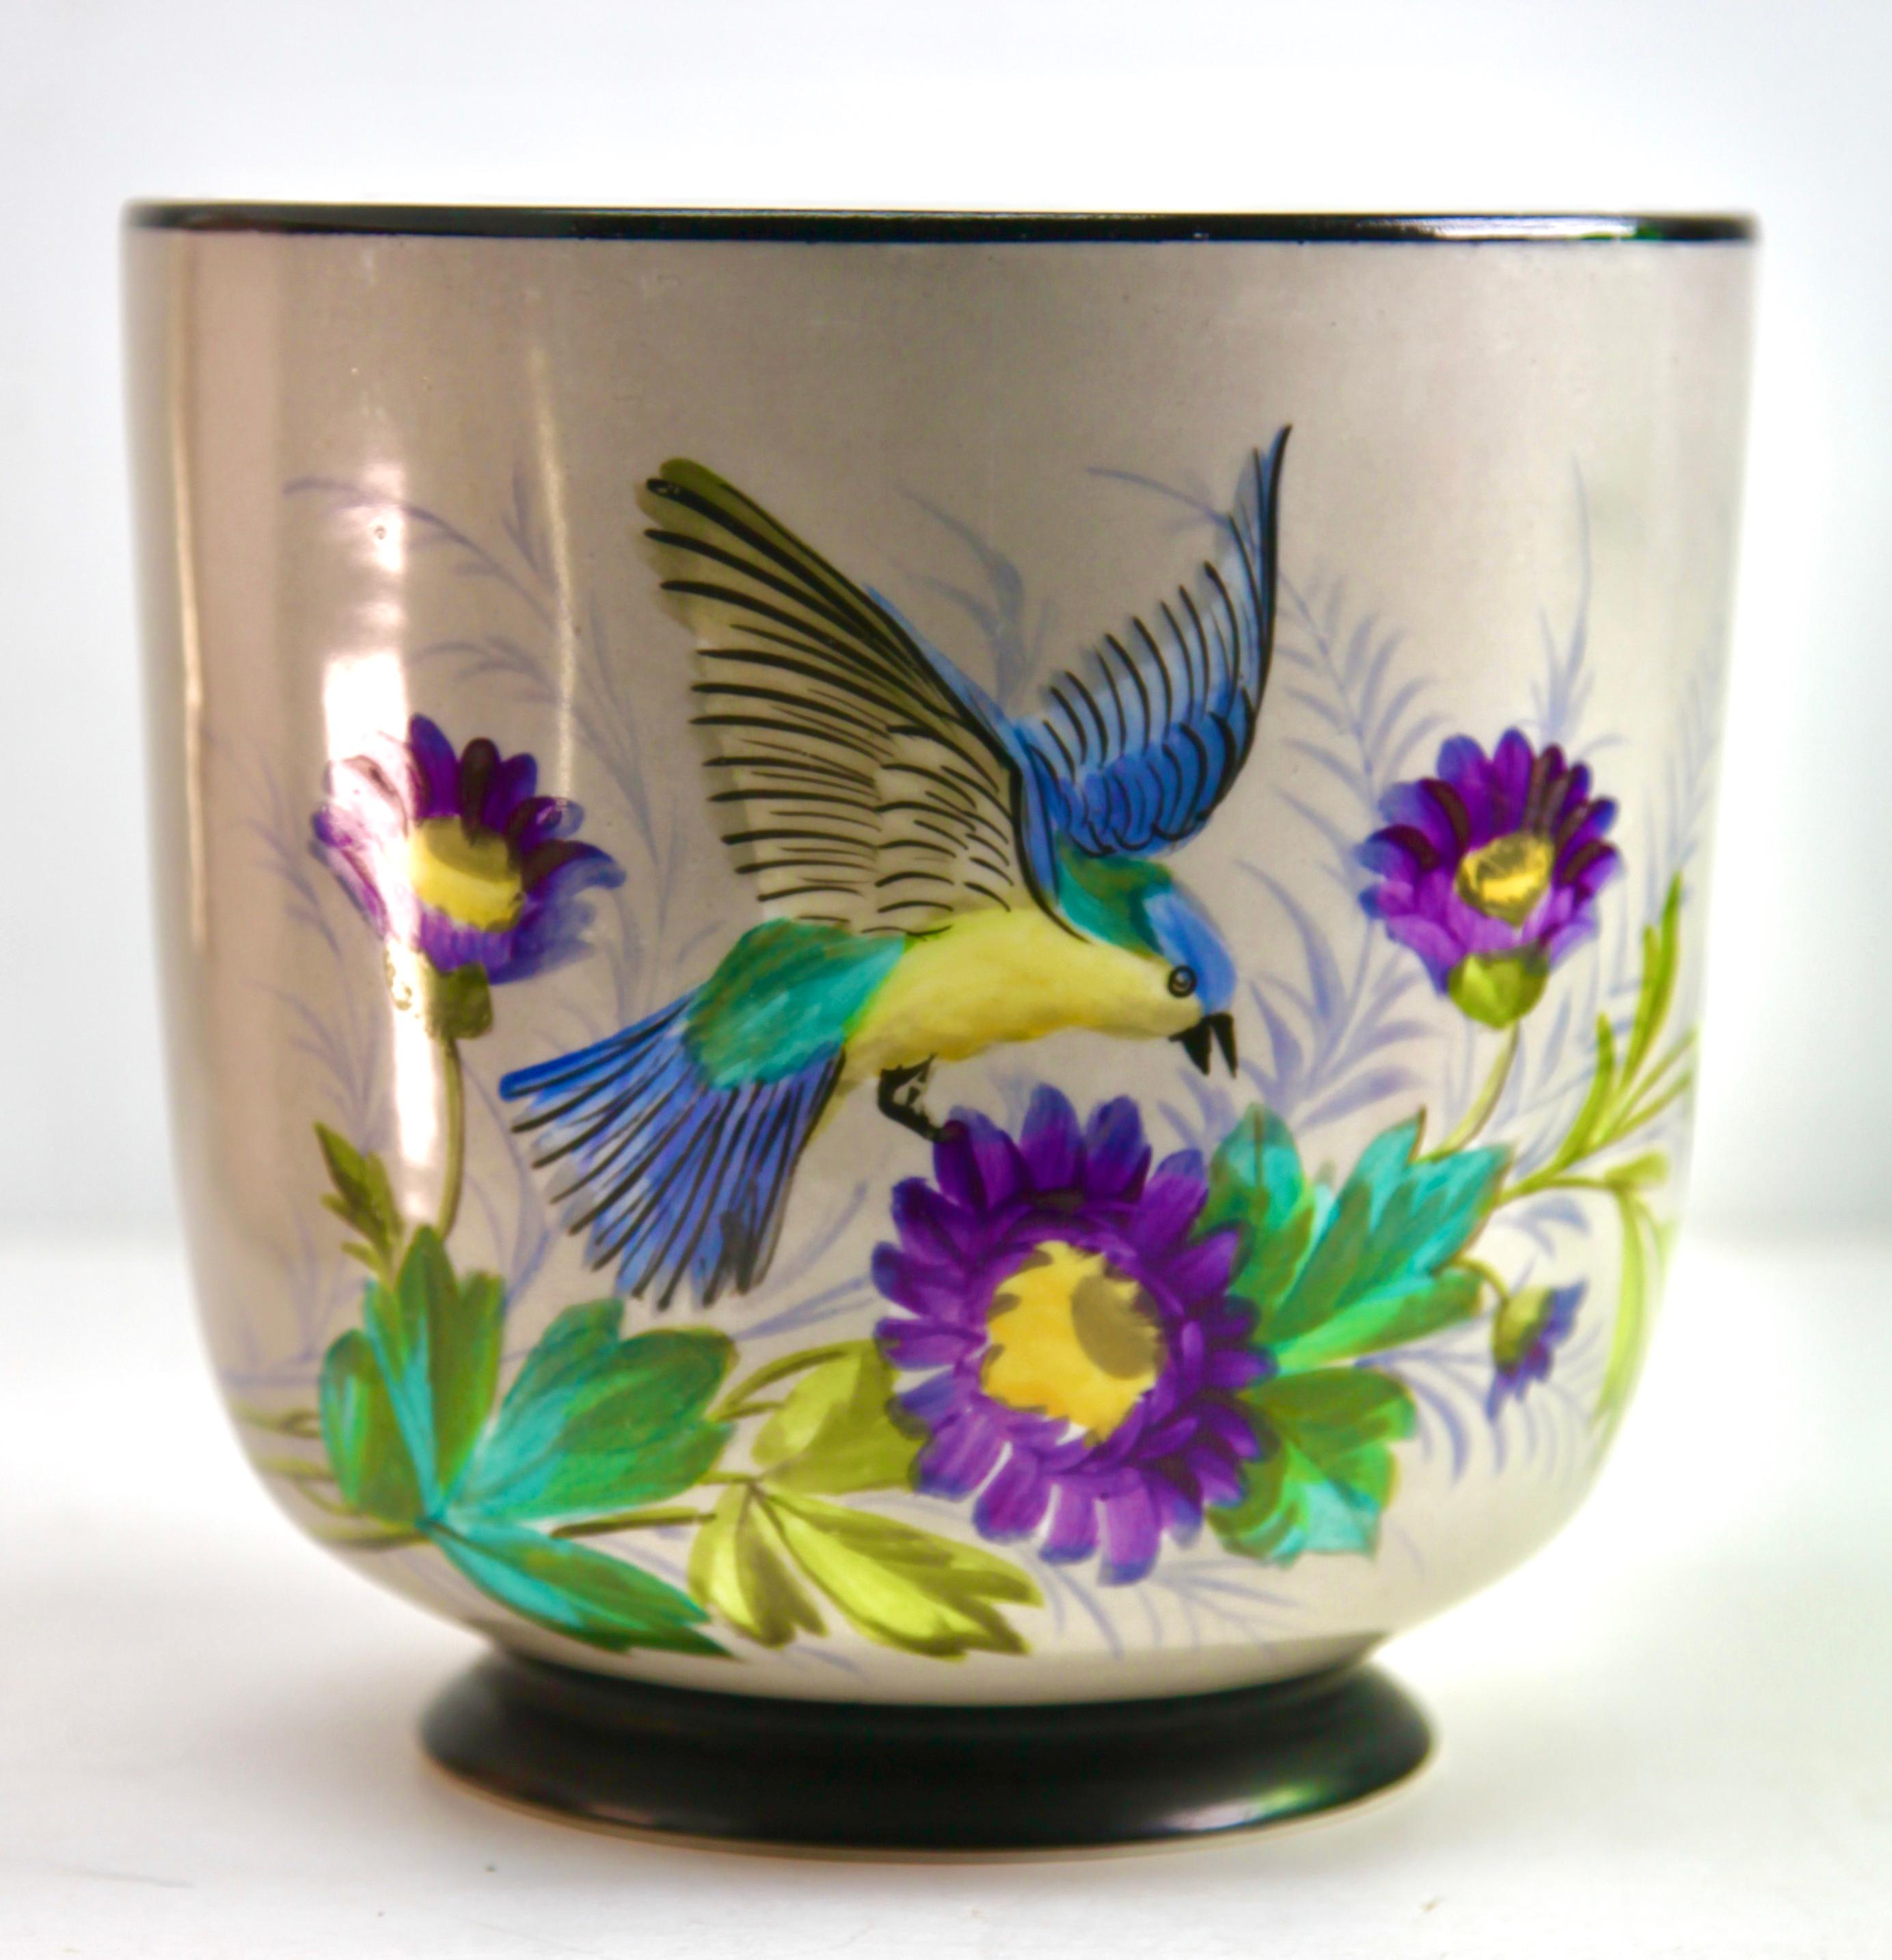 Art Nouveau Porcelain Planter, Cachepot Hand-Painted Whit Bird and Flowers